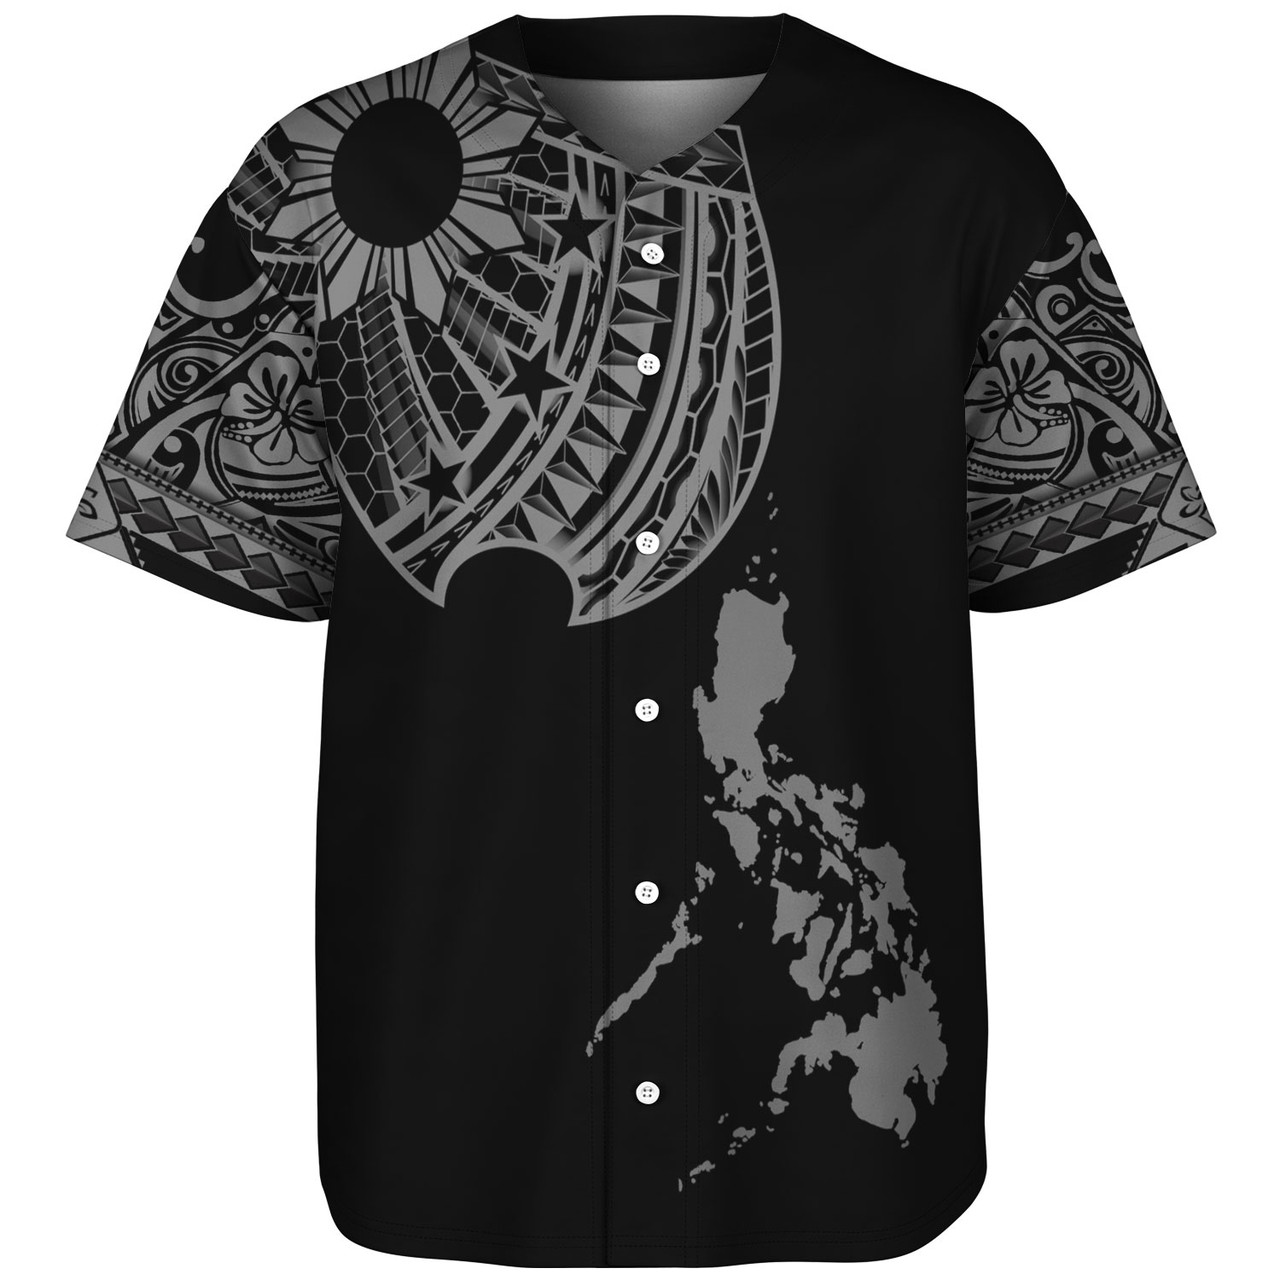 Philippines Filipinos Custom Personalised Baseball Shirt Filipinos Sun Tatau Tribal Patterns